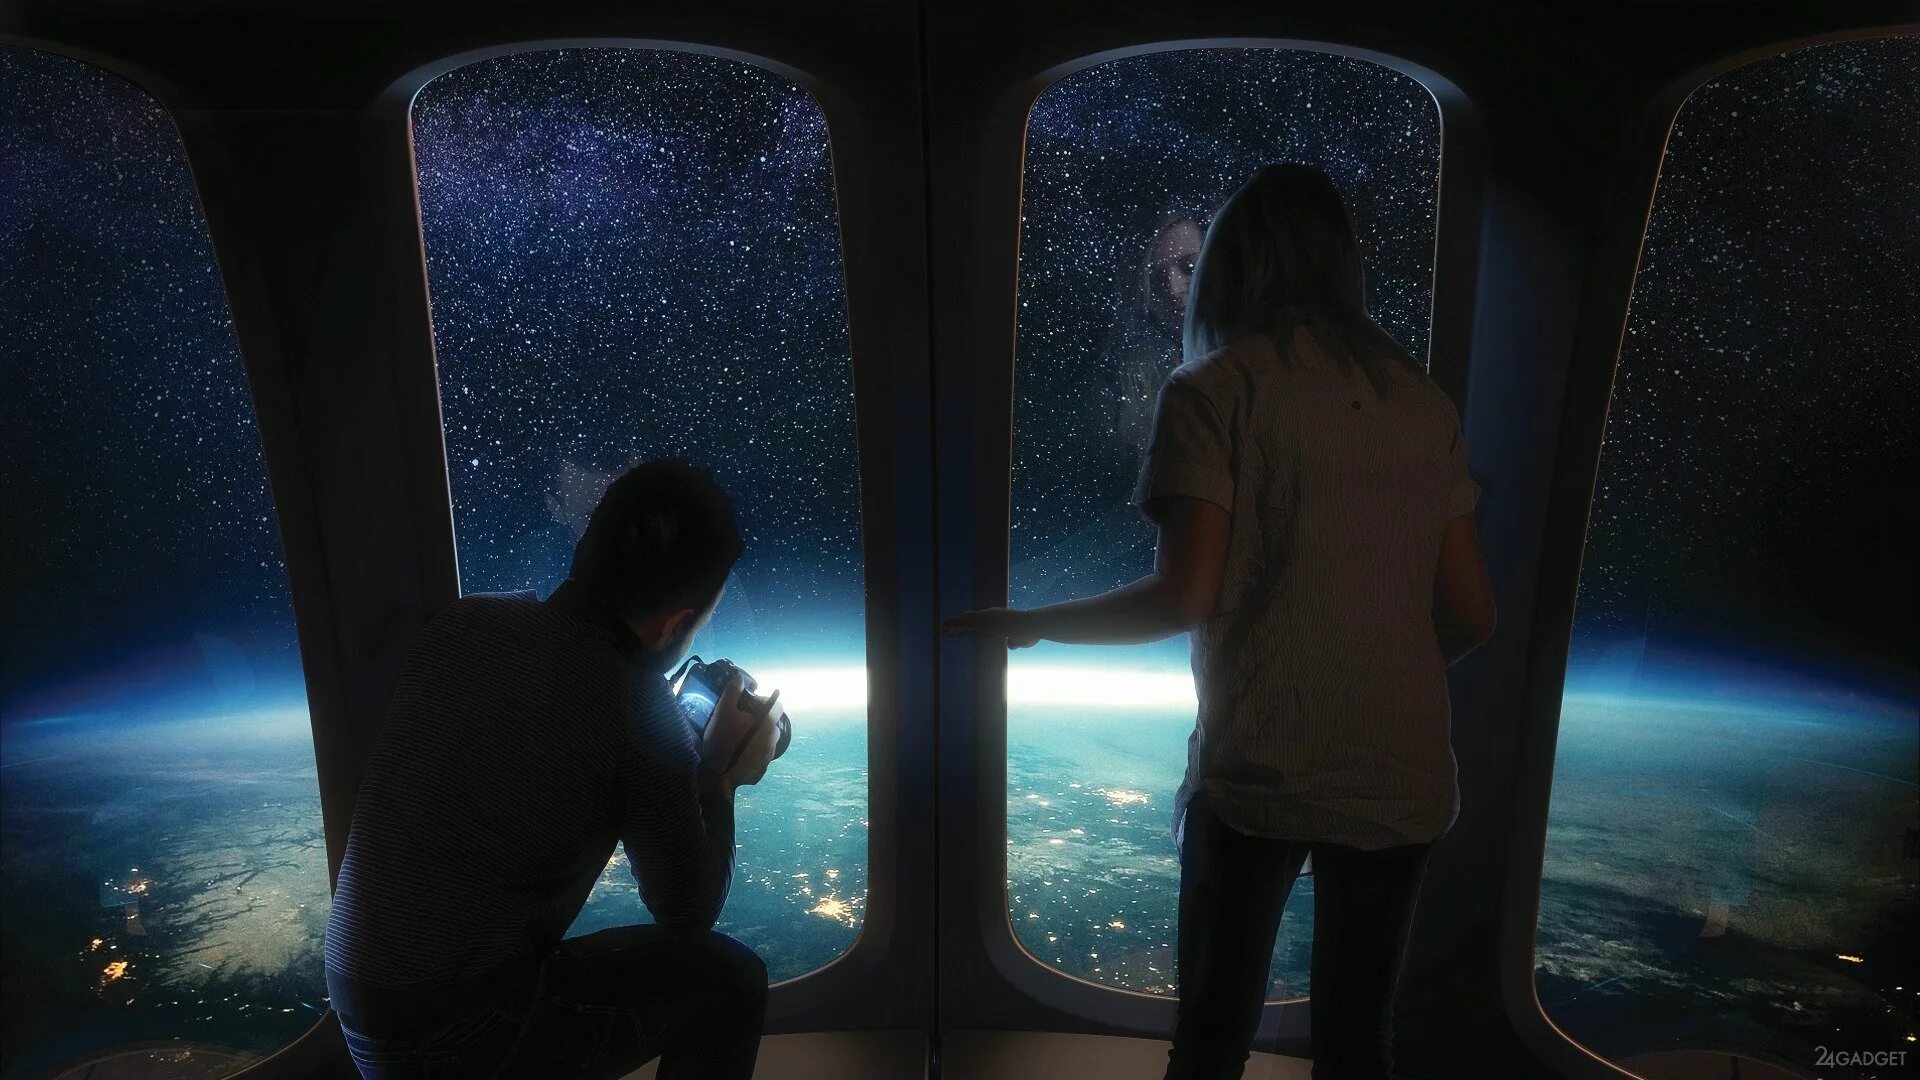 Space perspective космический туризм. Космический корабль для путешествий. Пара на космическом корабле. Окно космического корабля. Полетел если смог